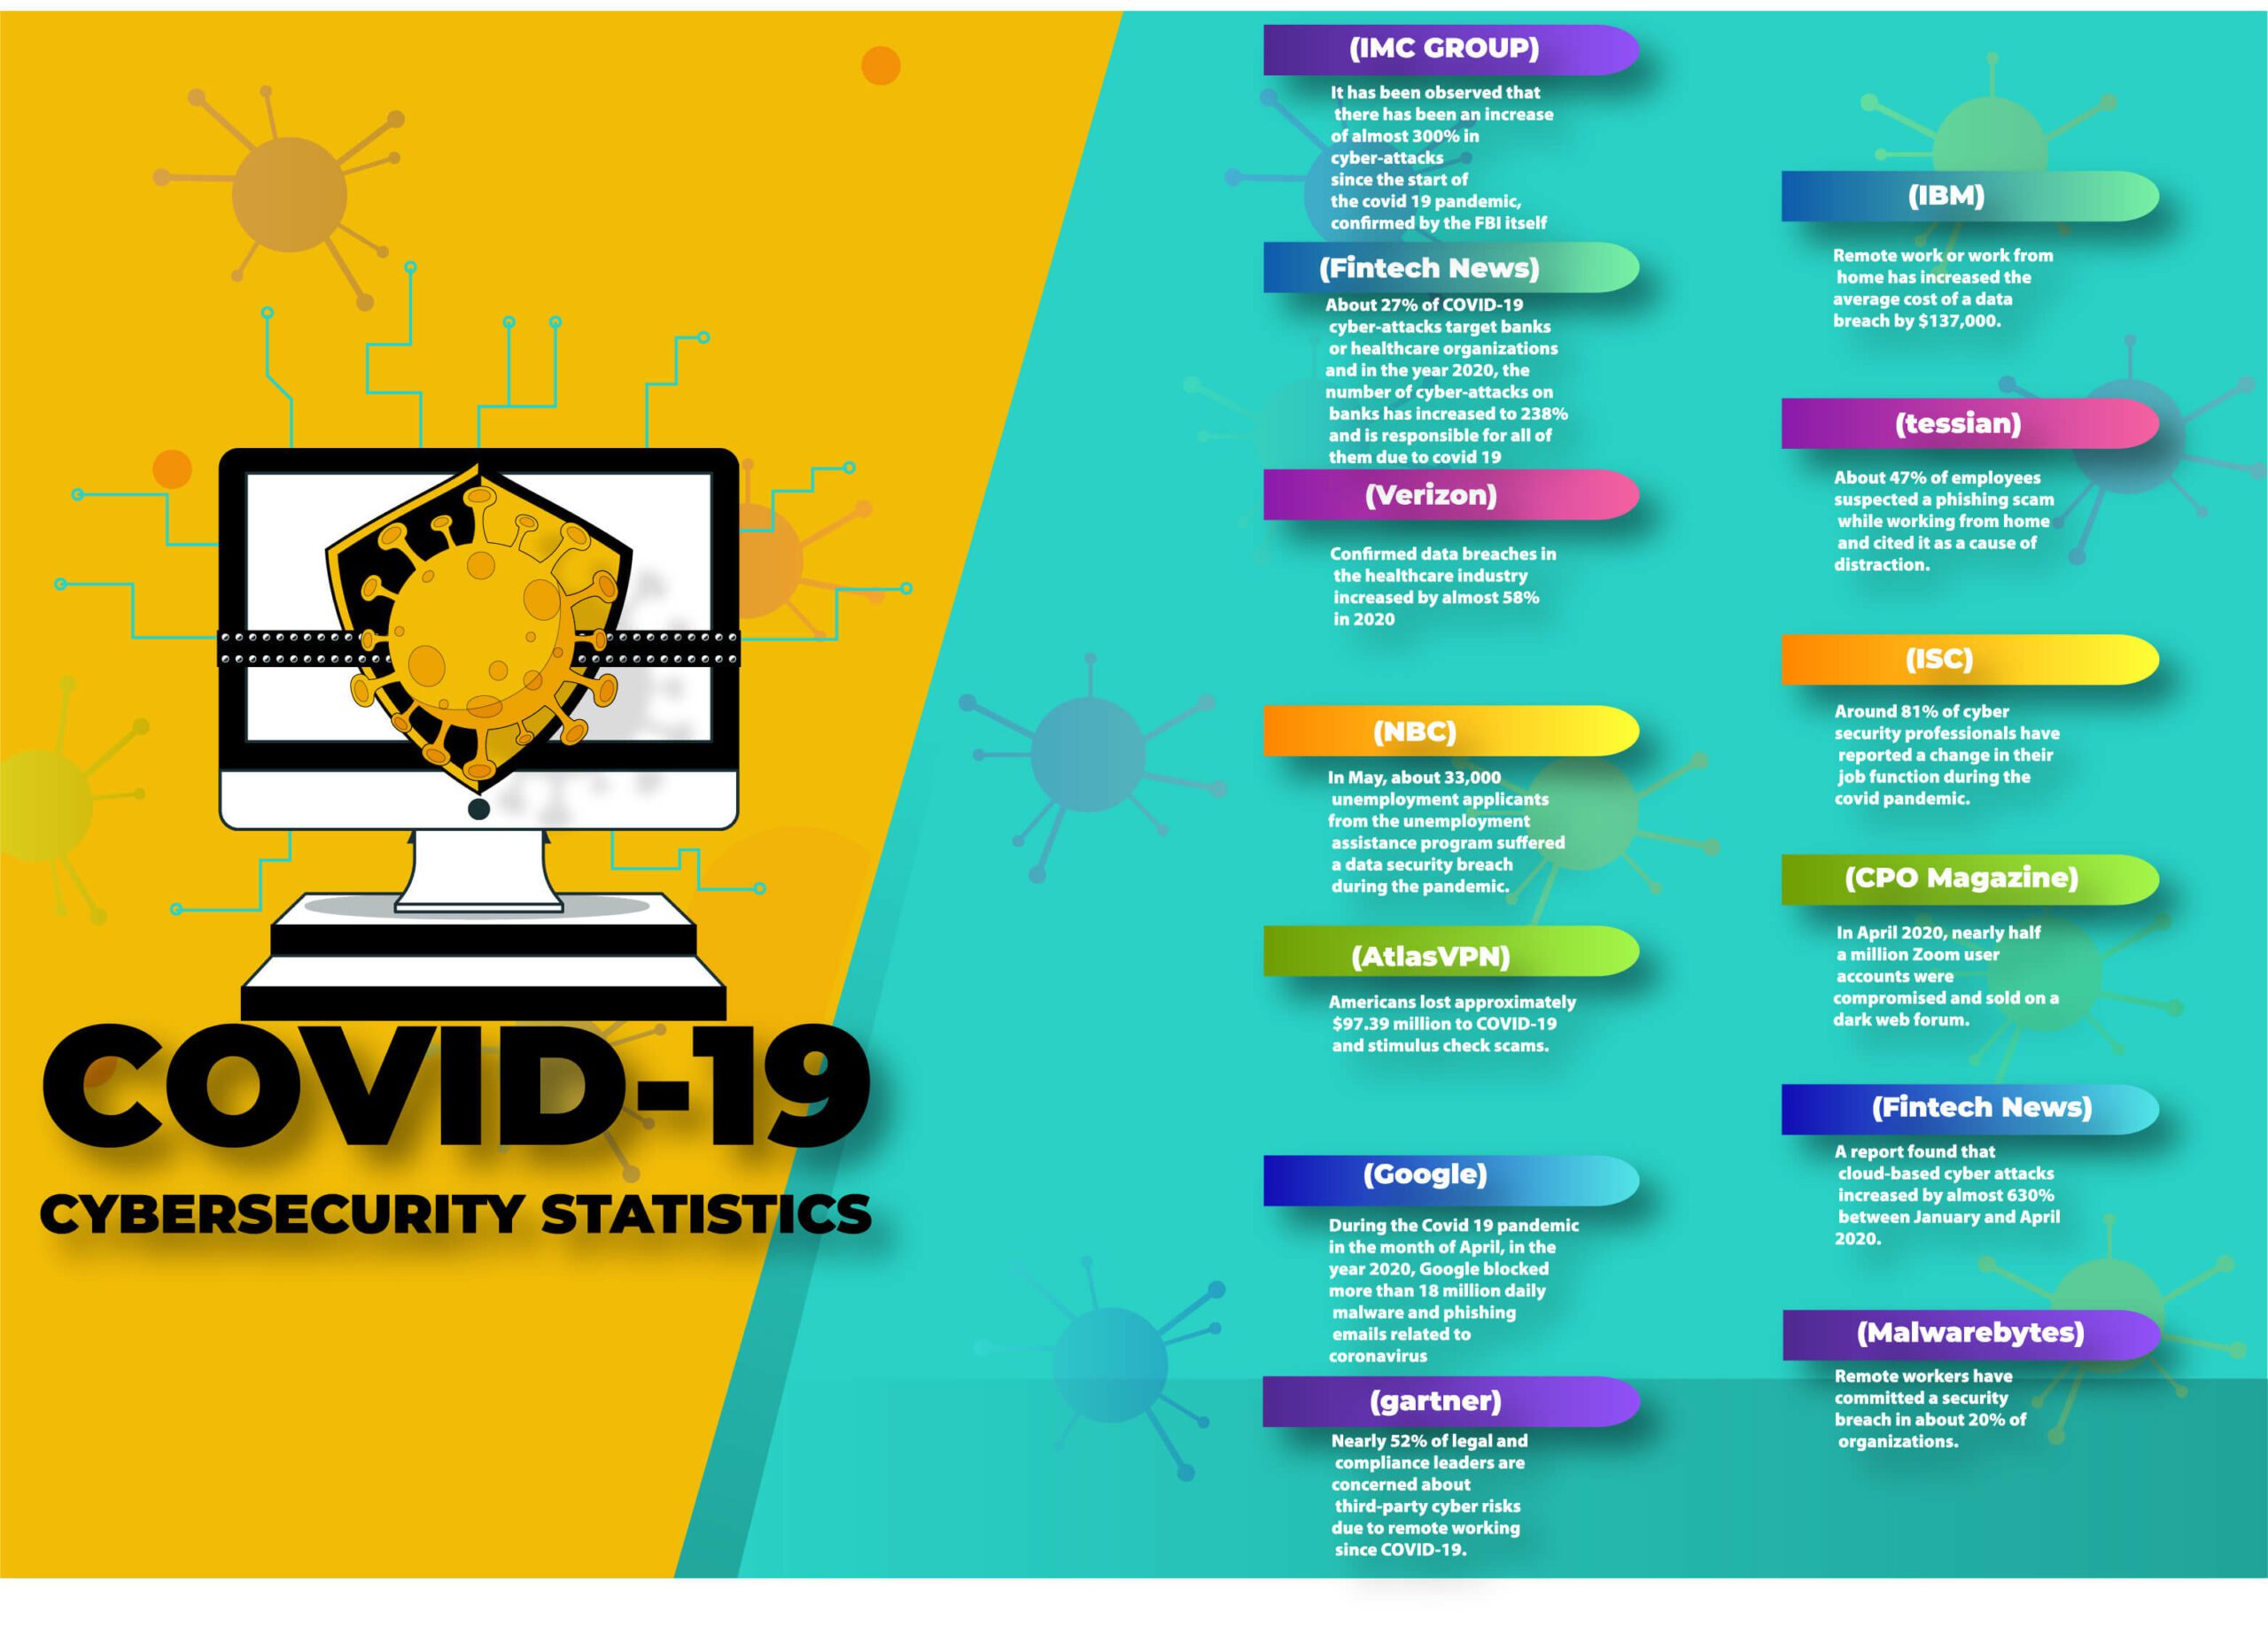 Covid-19 Cybersecurity Statistics